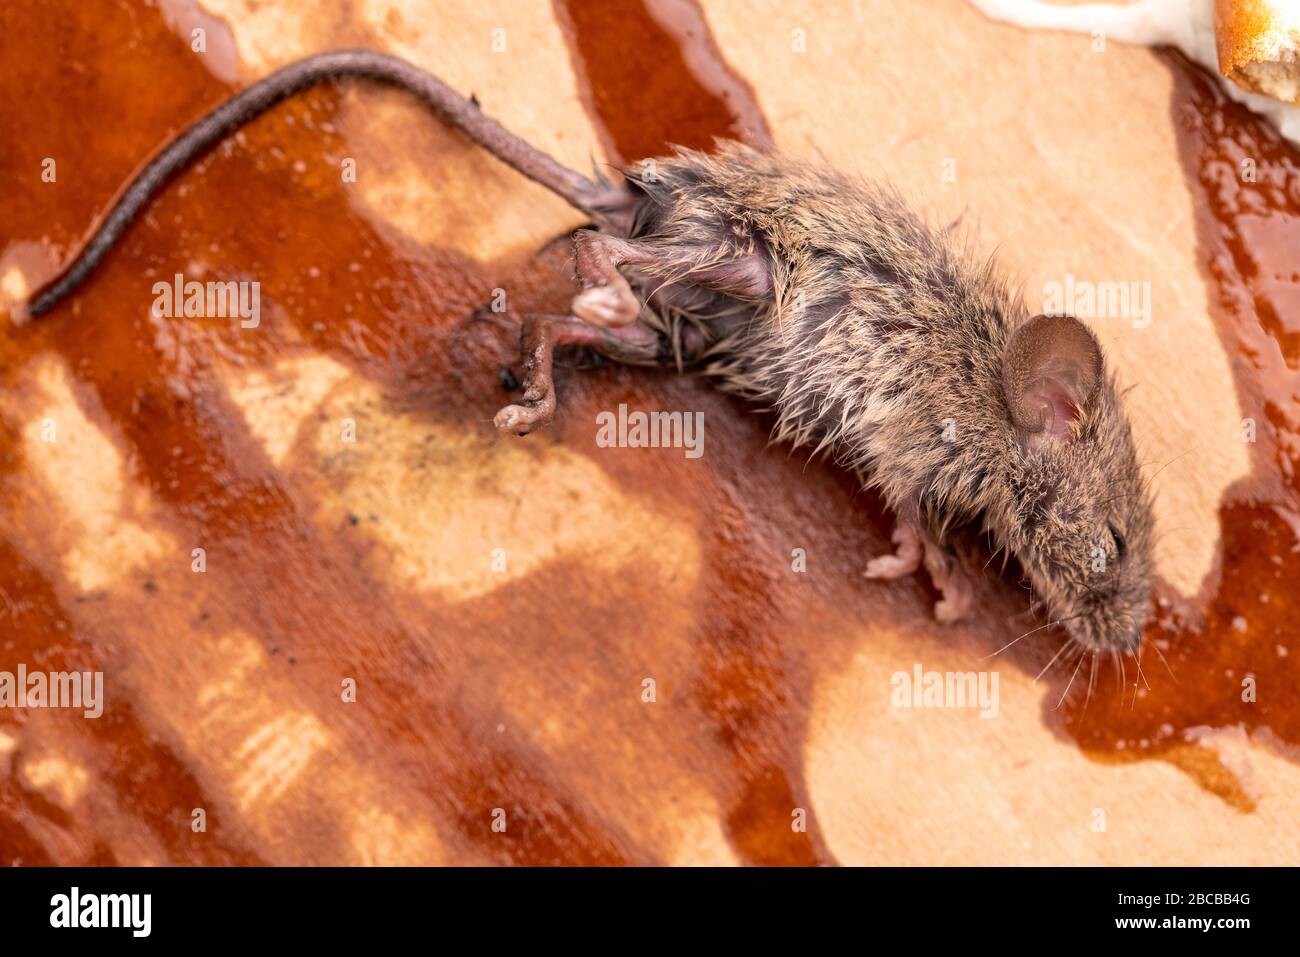 Dead mouse in glue trap Stock Photo - Alamy